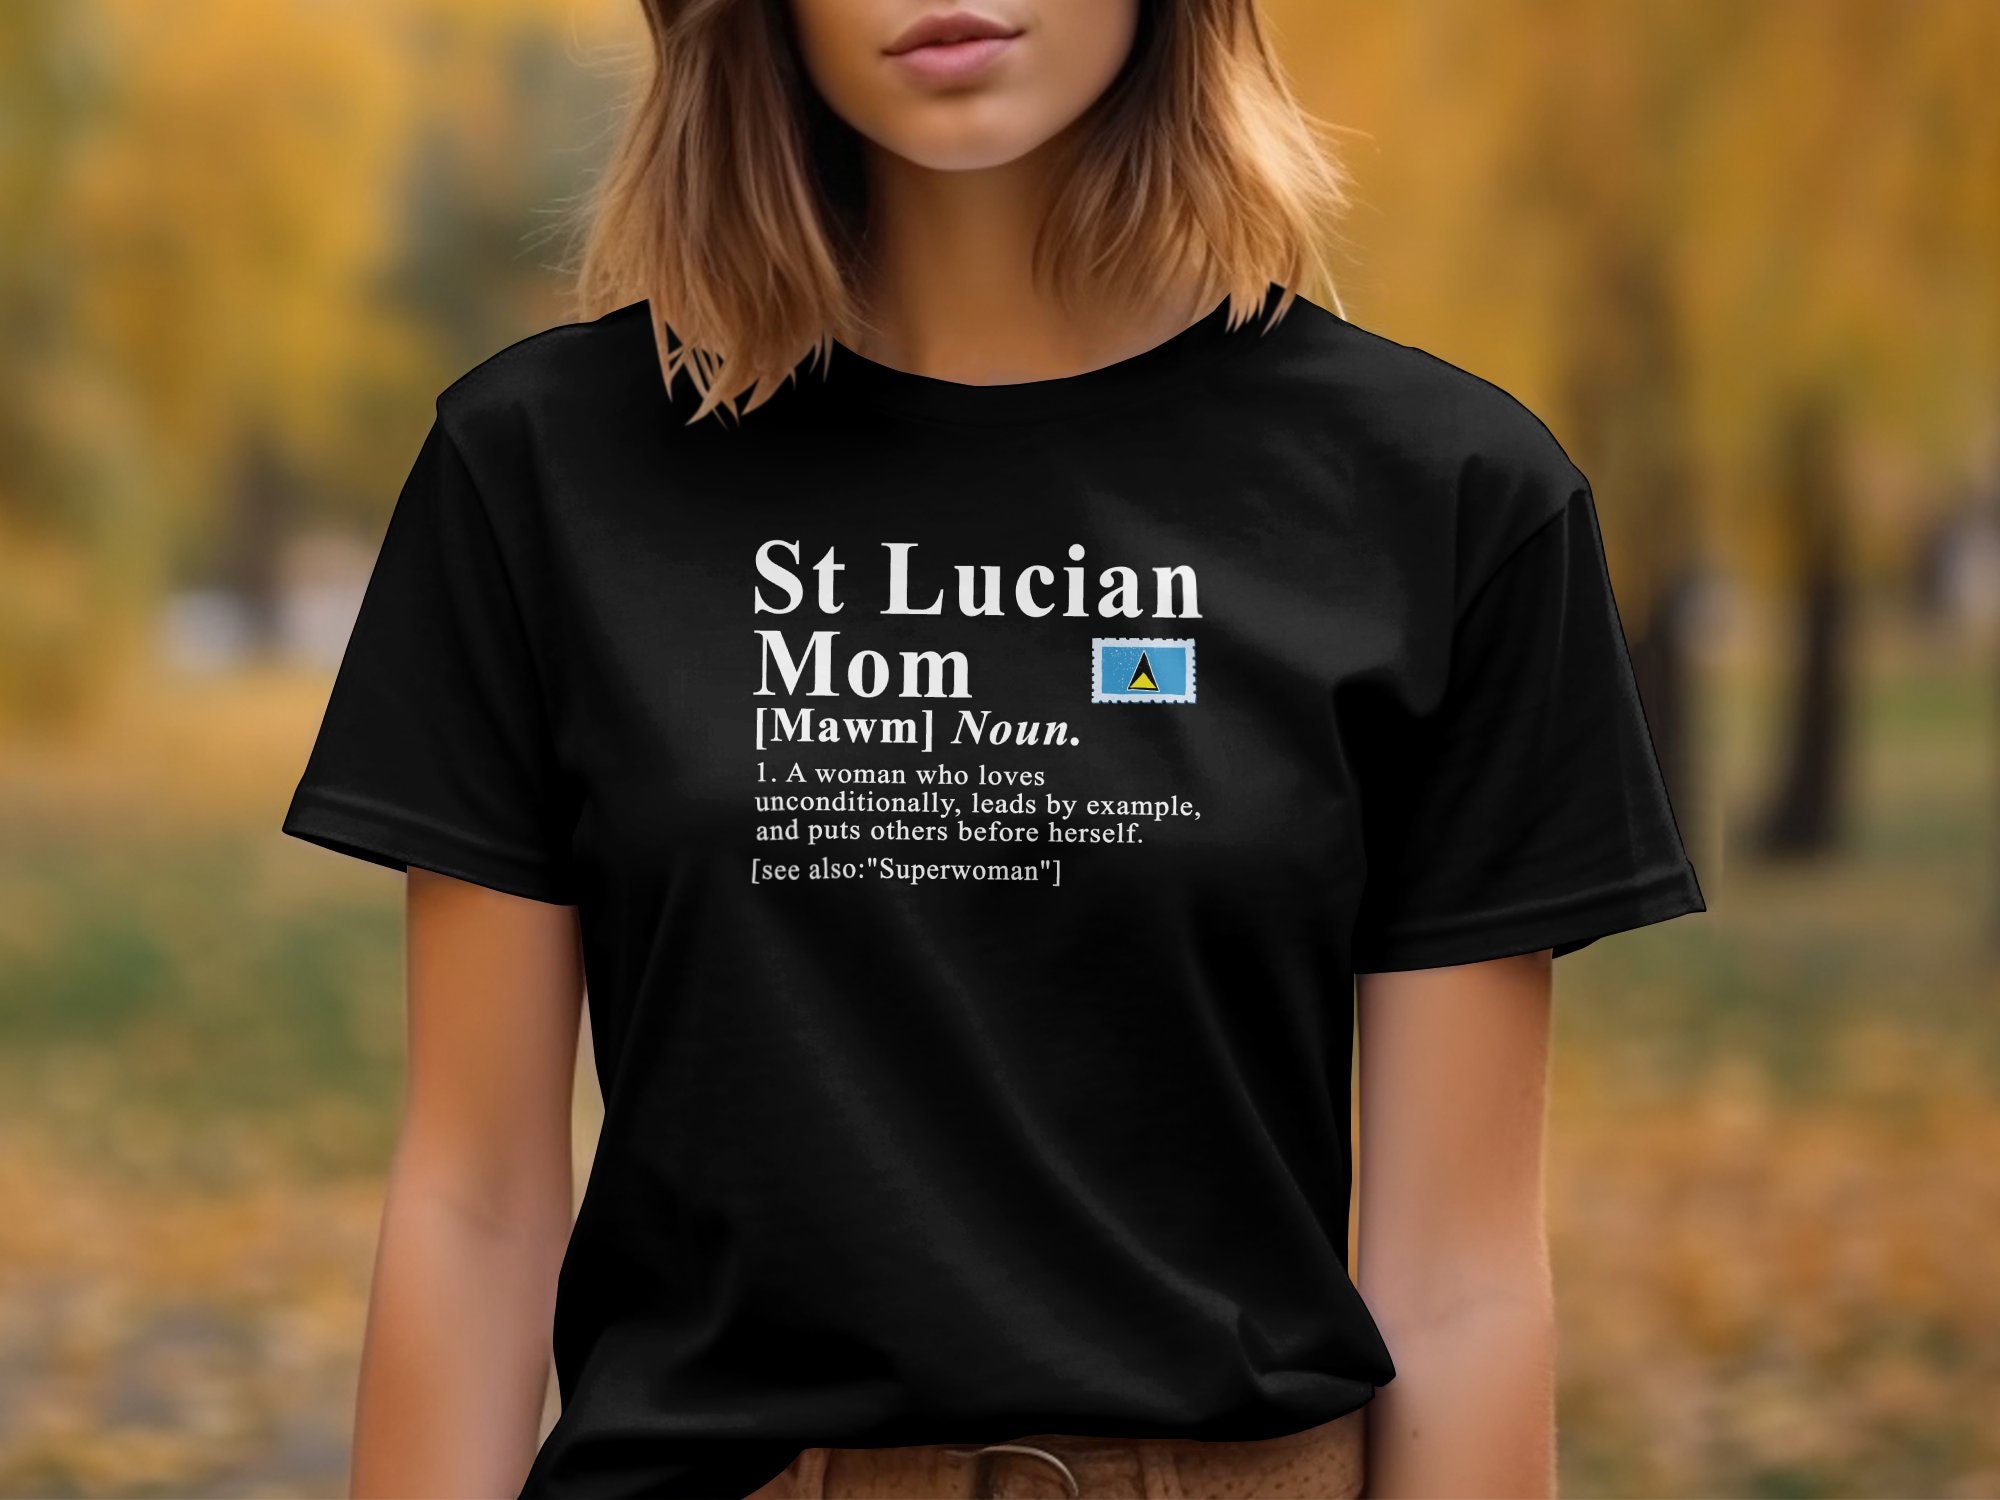 Mom Definition Shirt, St Lucian Mom Definition Shirt, St Lucia Shirt